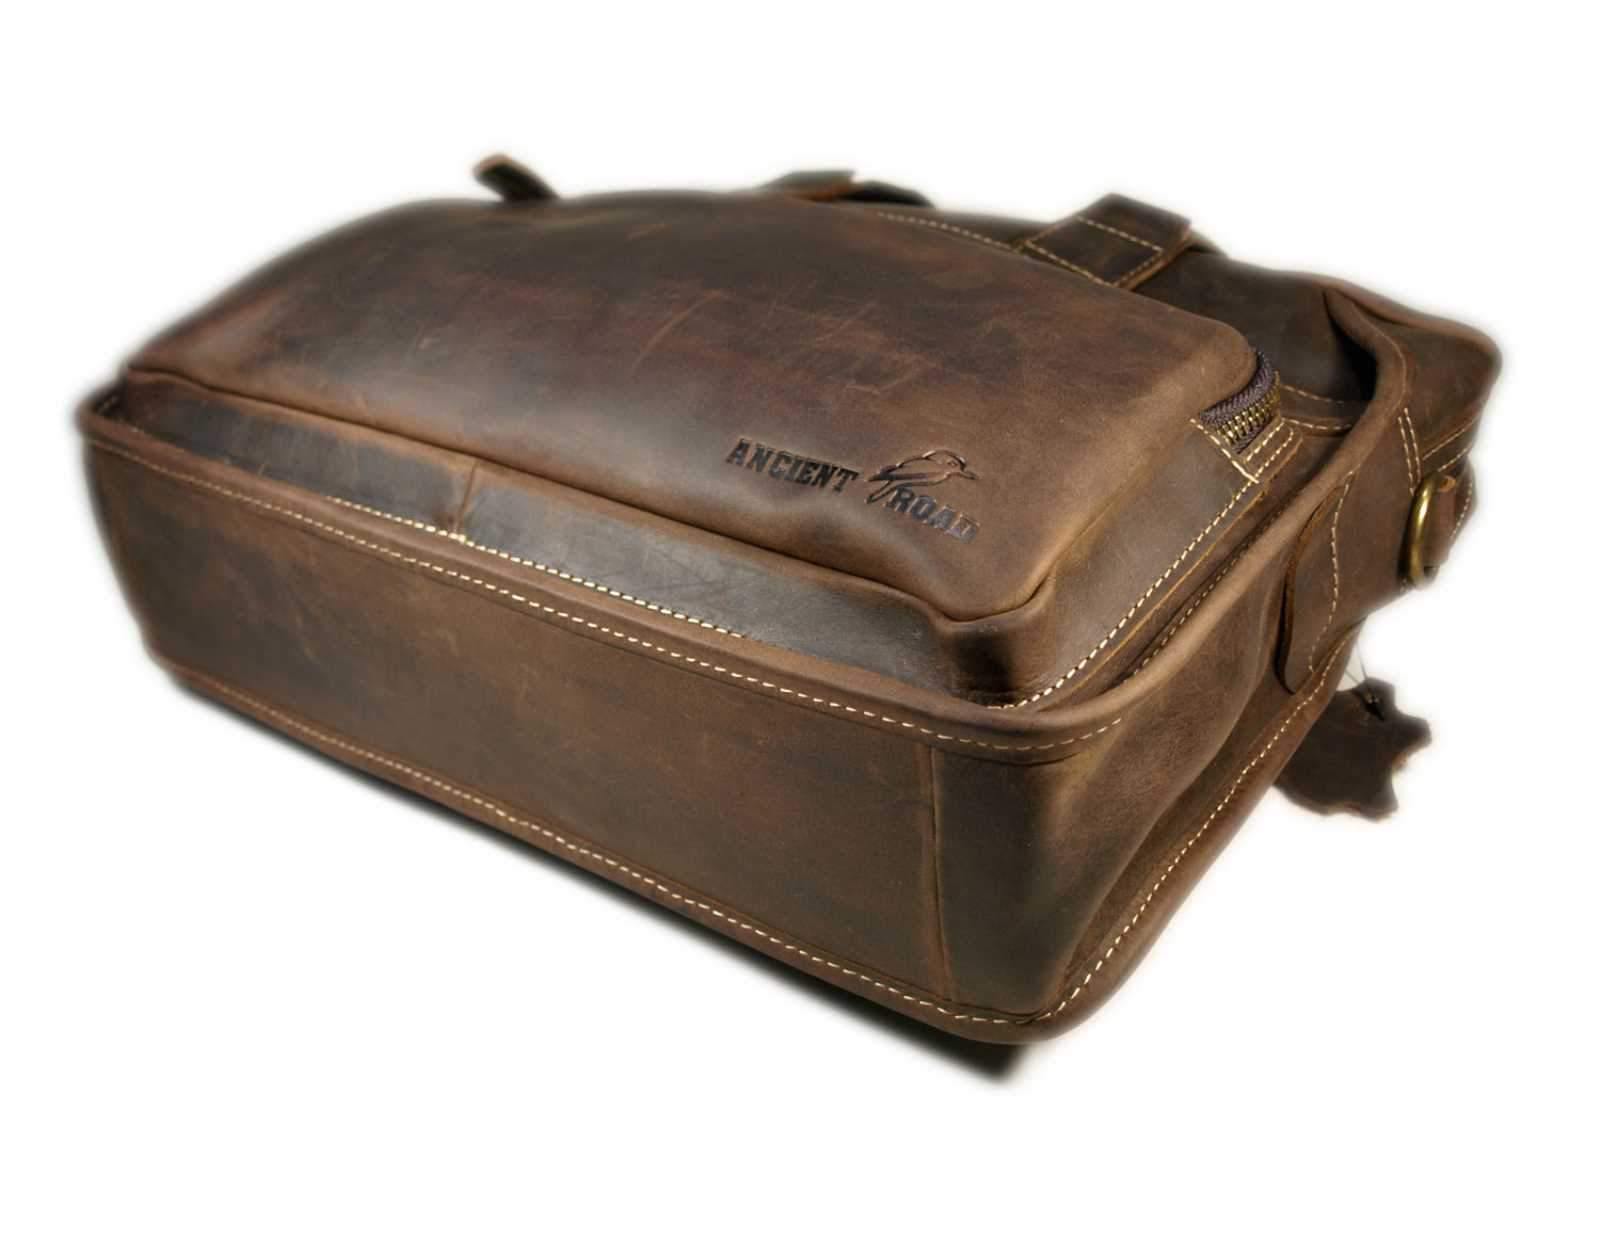 ANCIENT ROAD Genuine Leather Mens Handbag Briefcase 14",15" laptop Bag QJ015-AU - Super Buyer